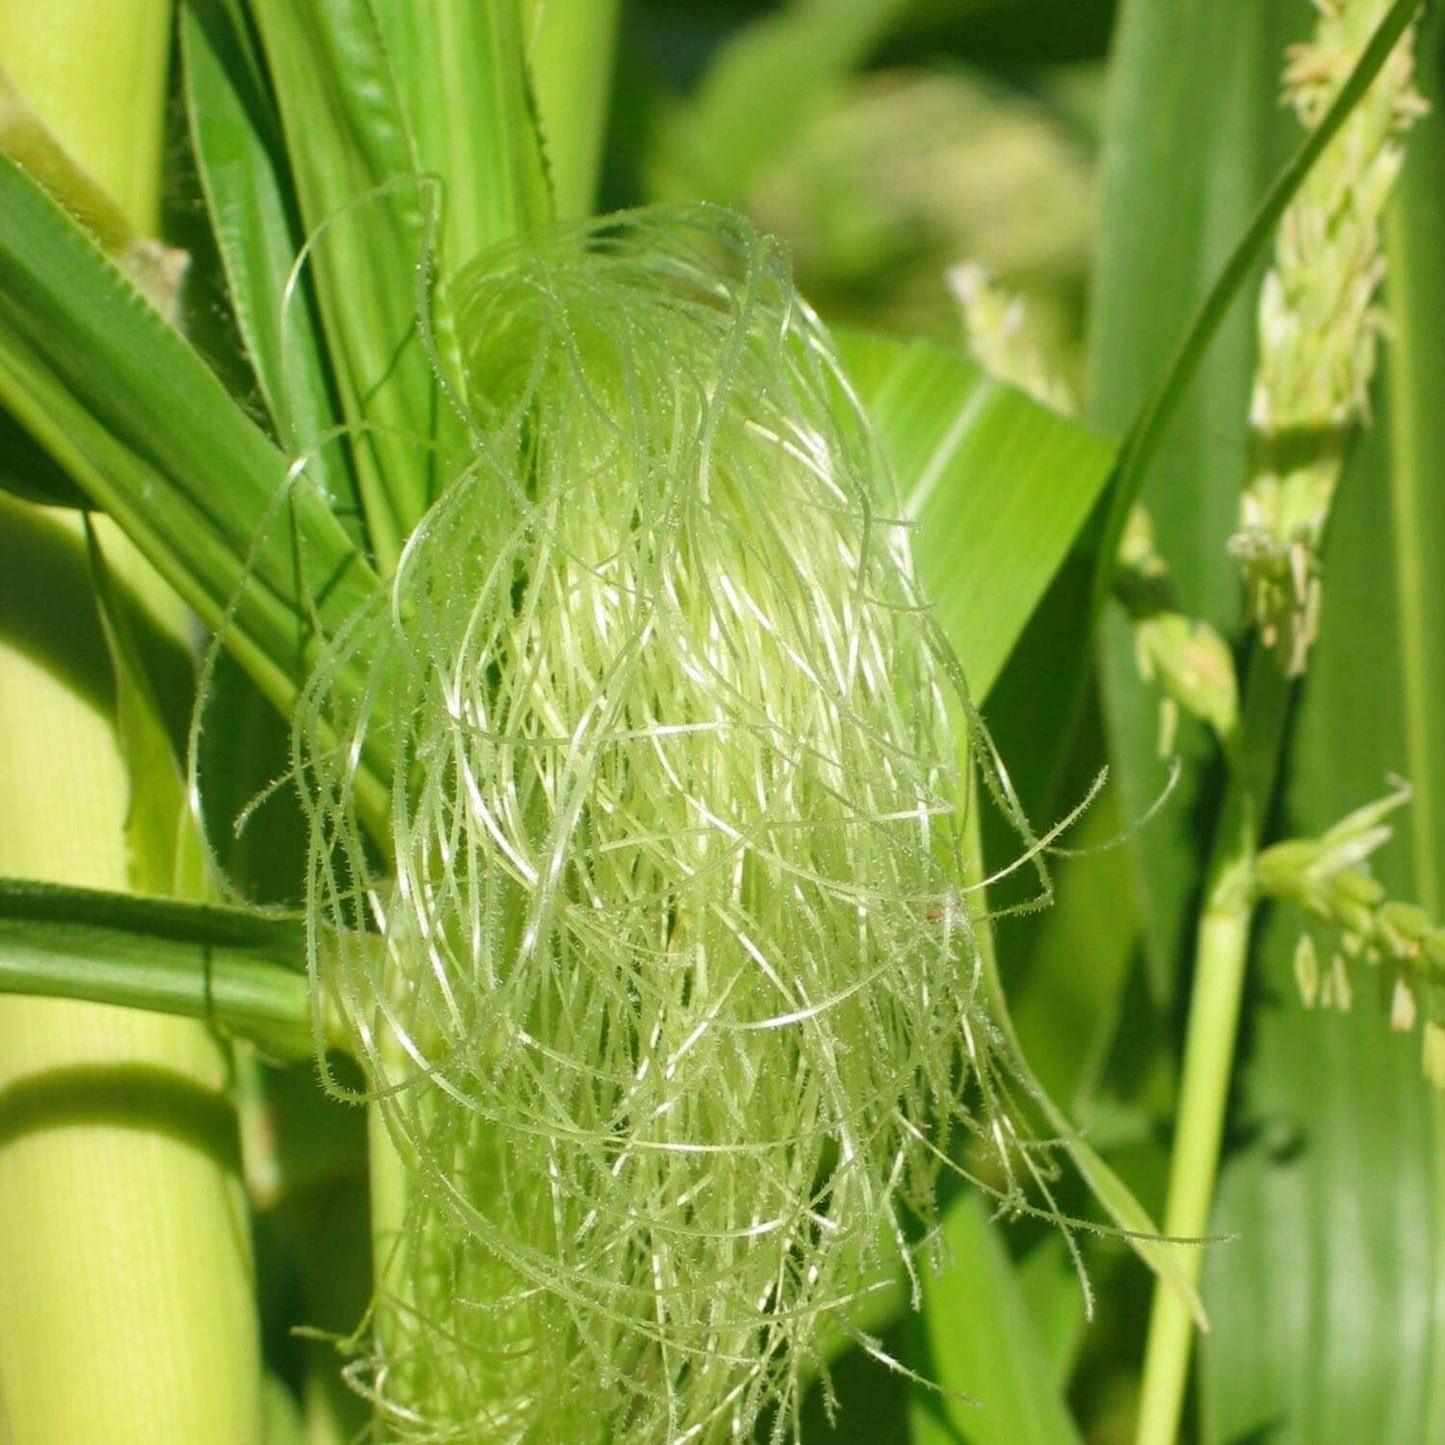 Corn Silk